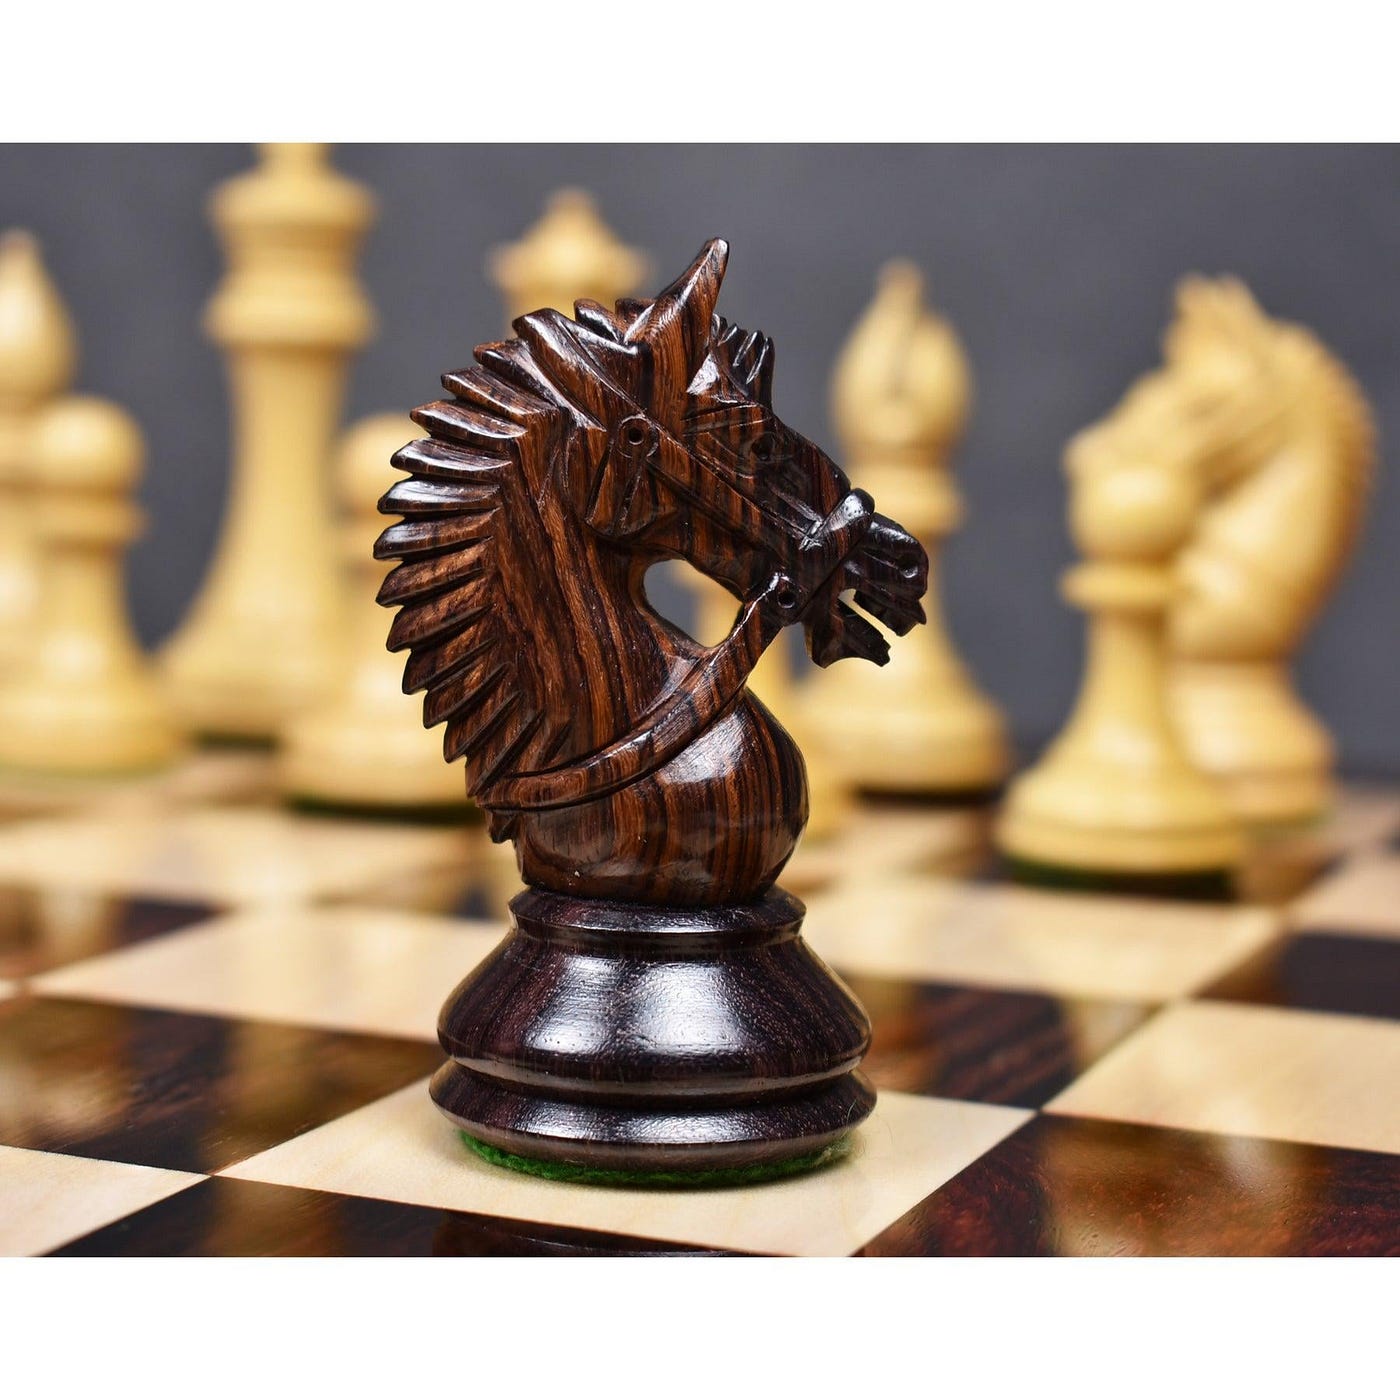 royal luxury chess sets